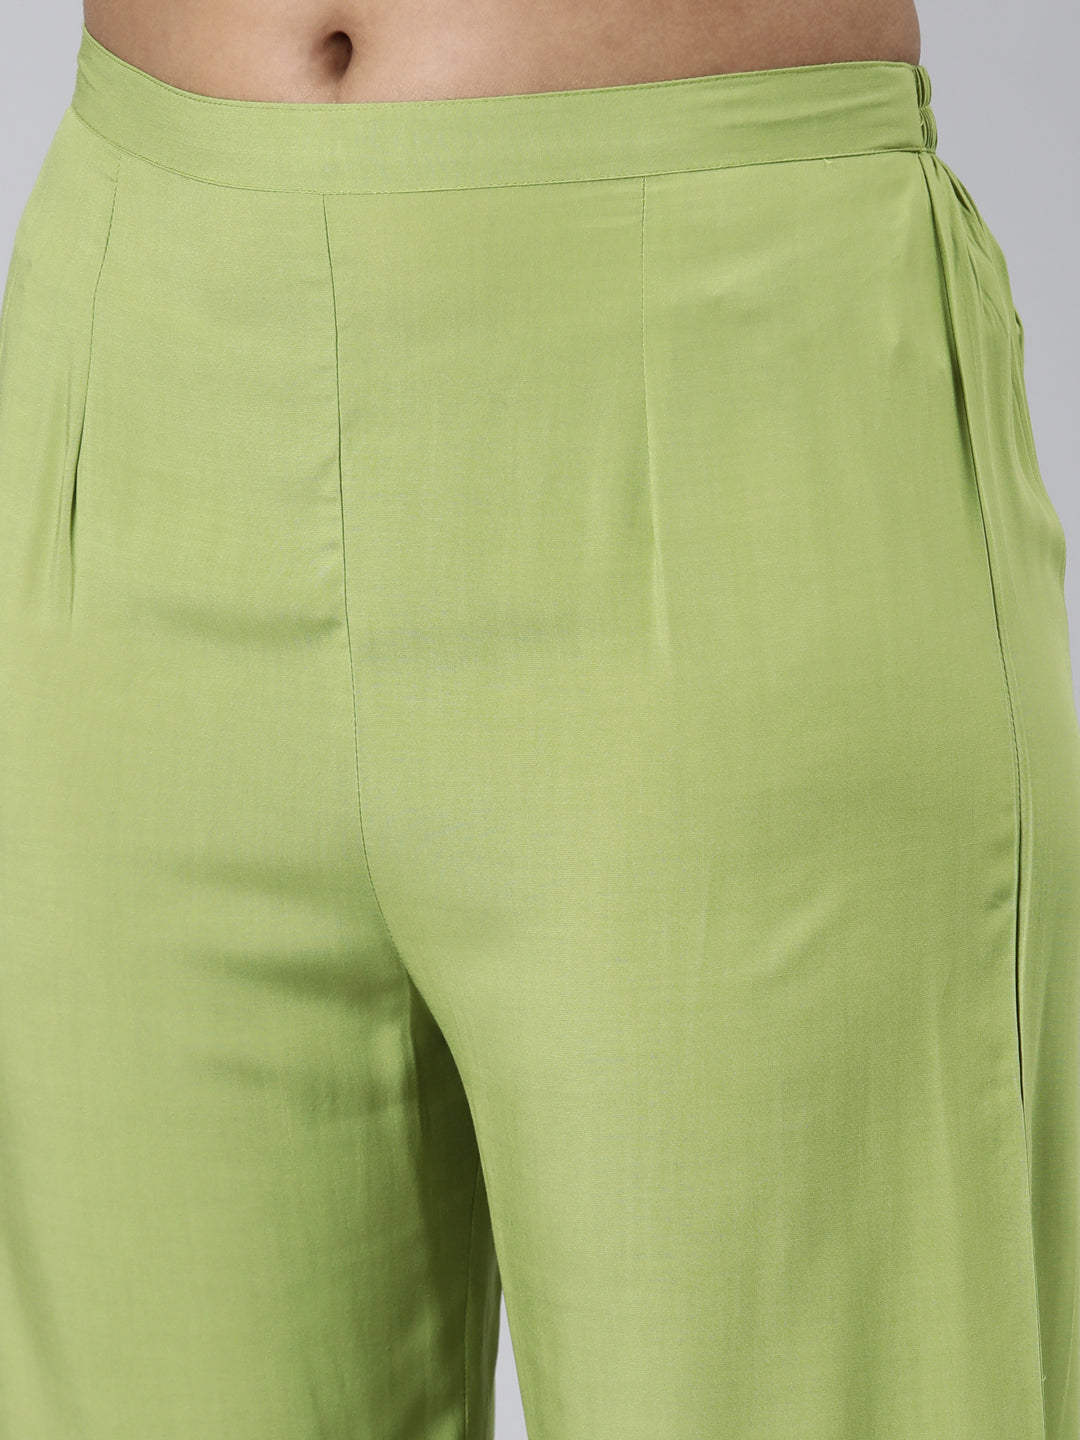 Neerus Green Regular Calf Length Solid Kurta Solid Trousers With Dupatta